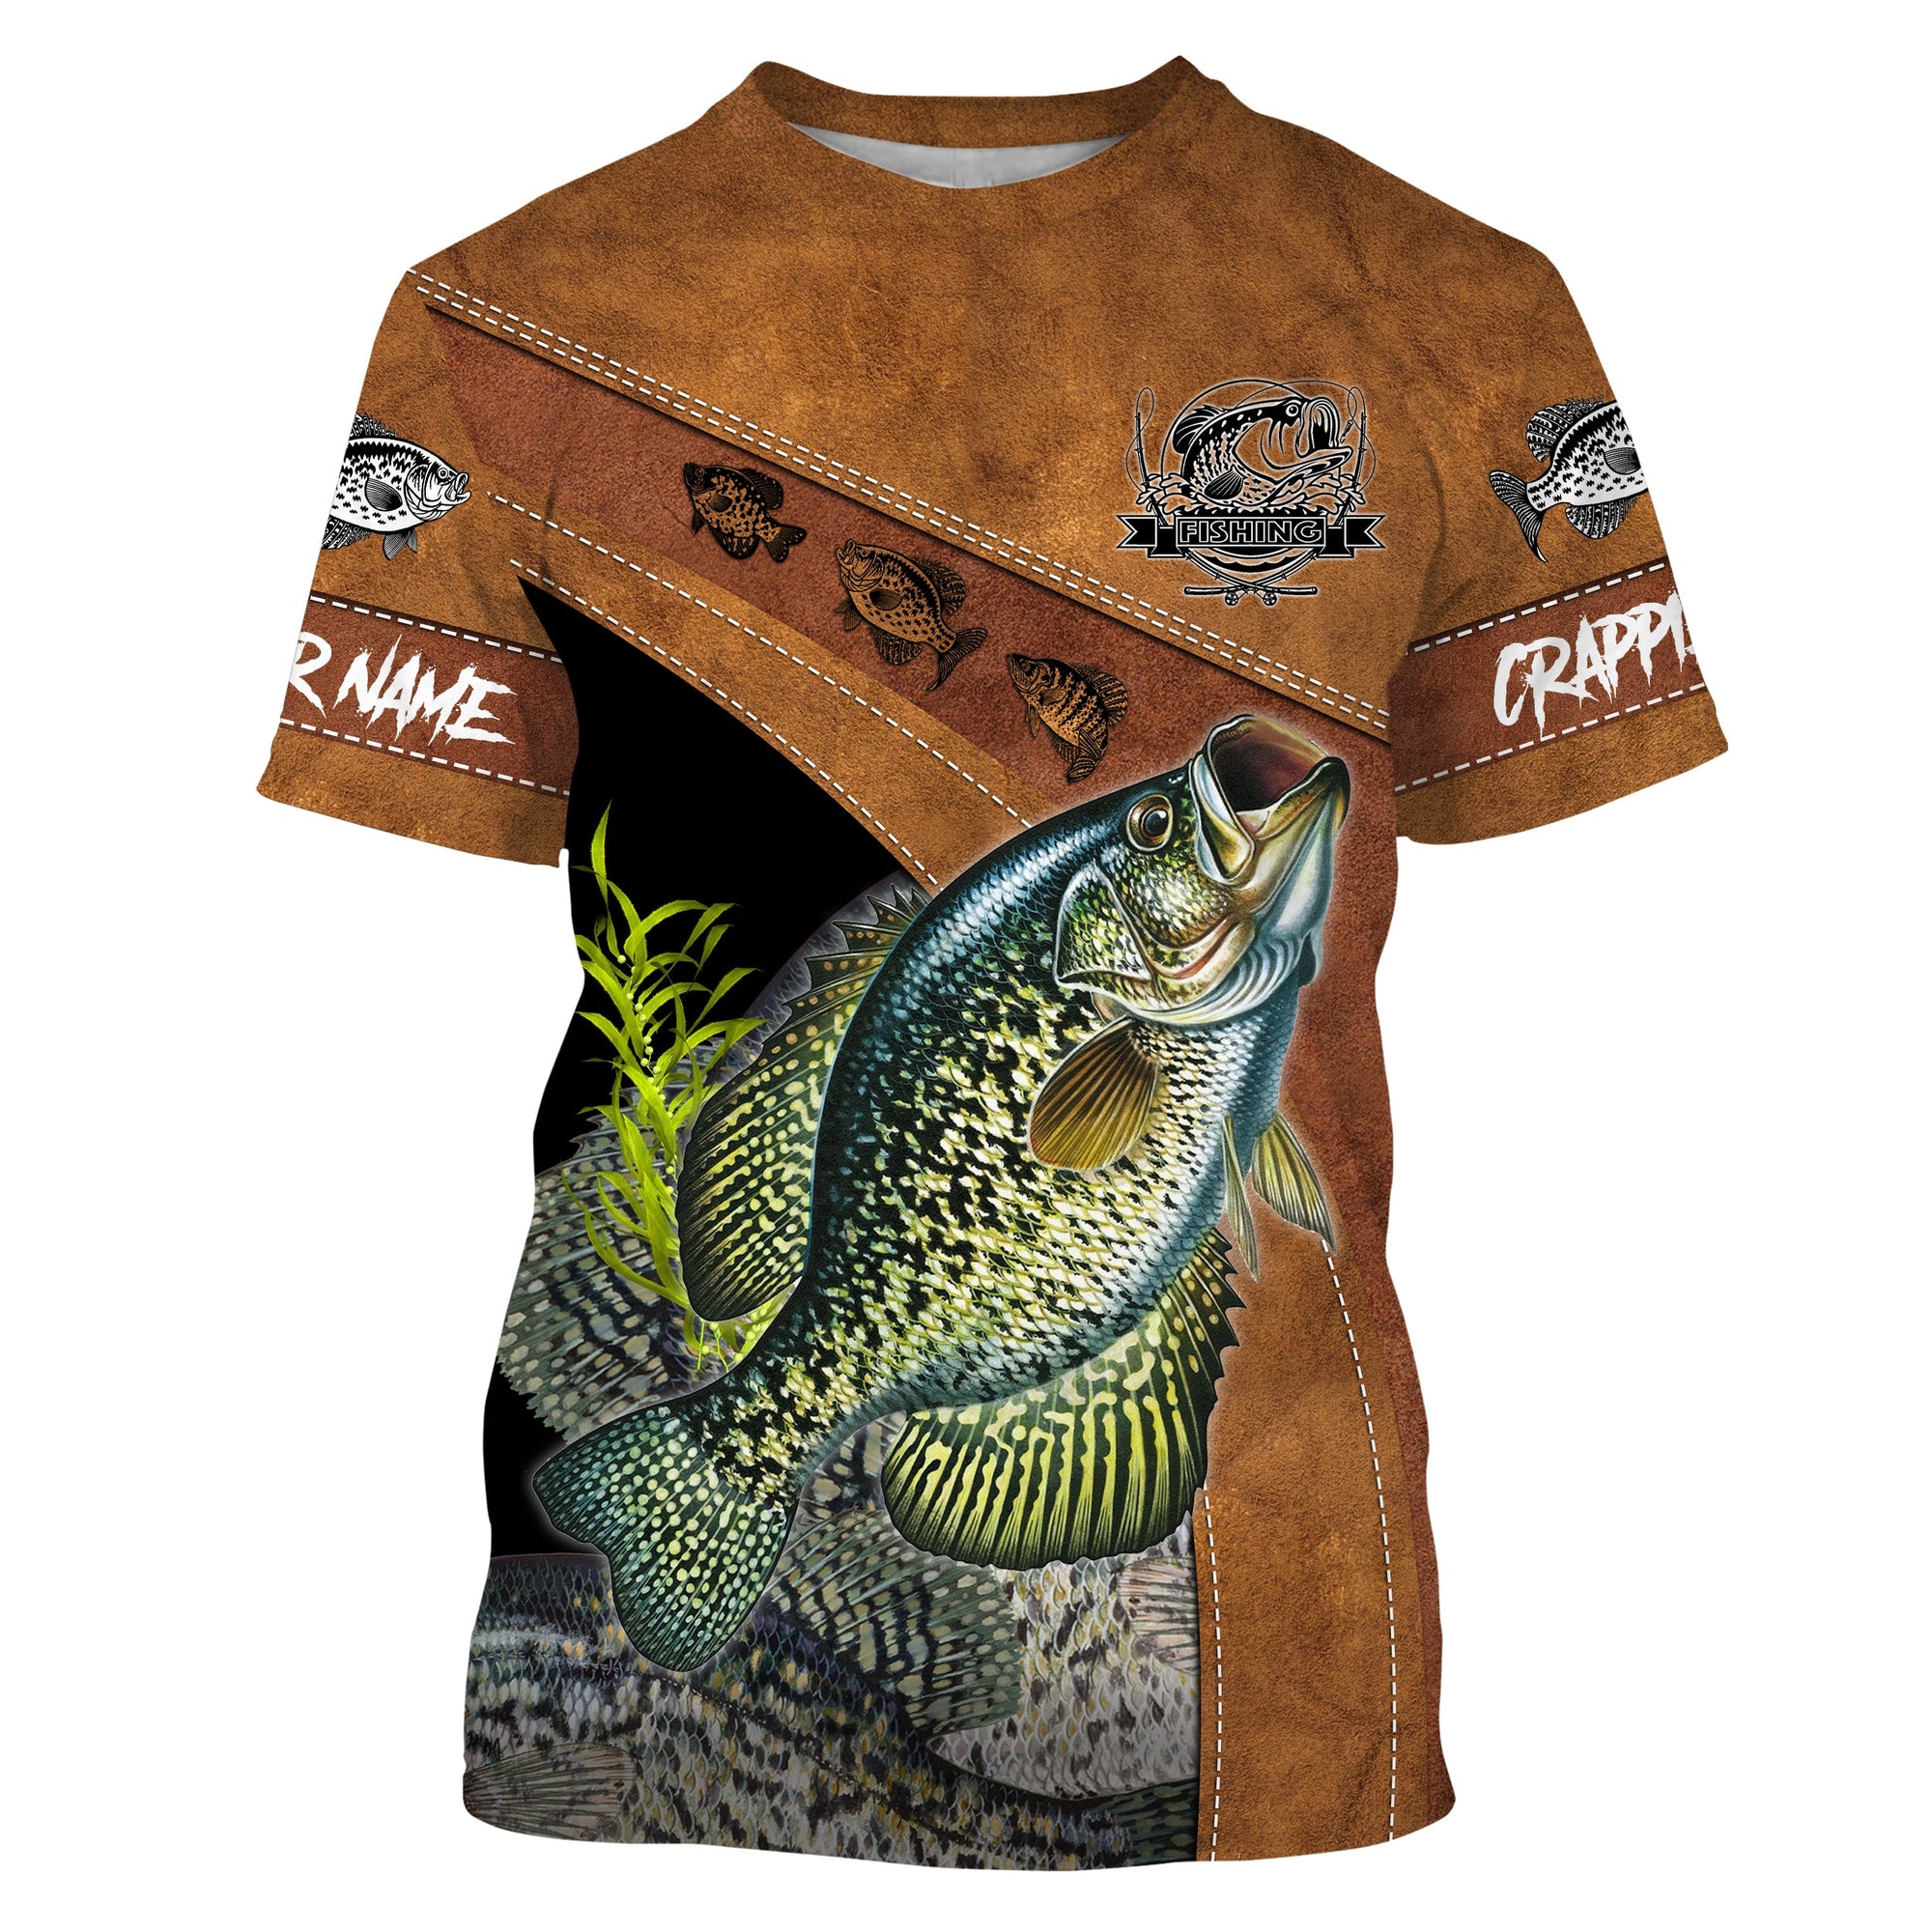 crappie-fishing-uv-protection-quick-dry-customized-name-fishing-shirts-upf-30-performance-shirts-for-men-women-kid-fishing-t-shirt